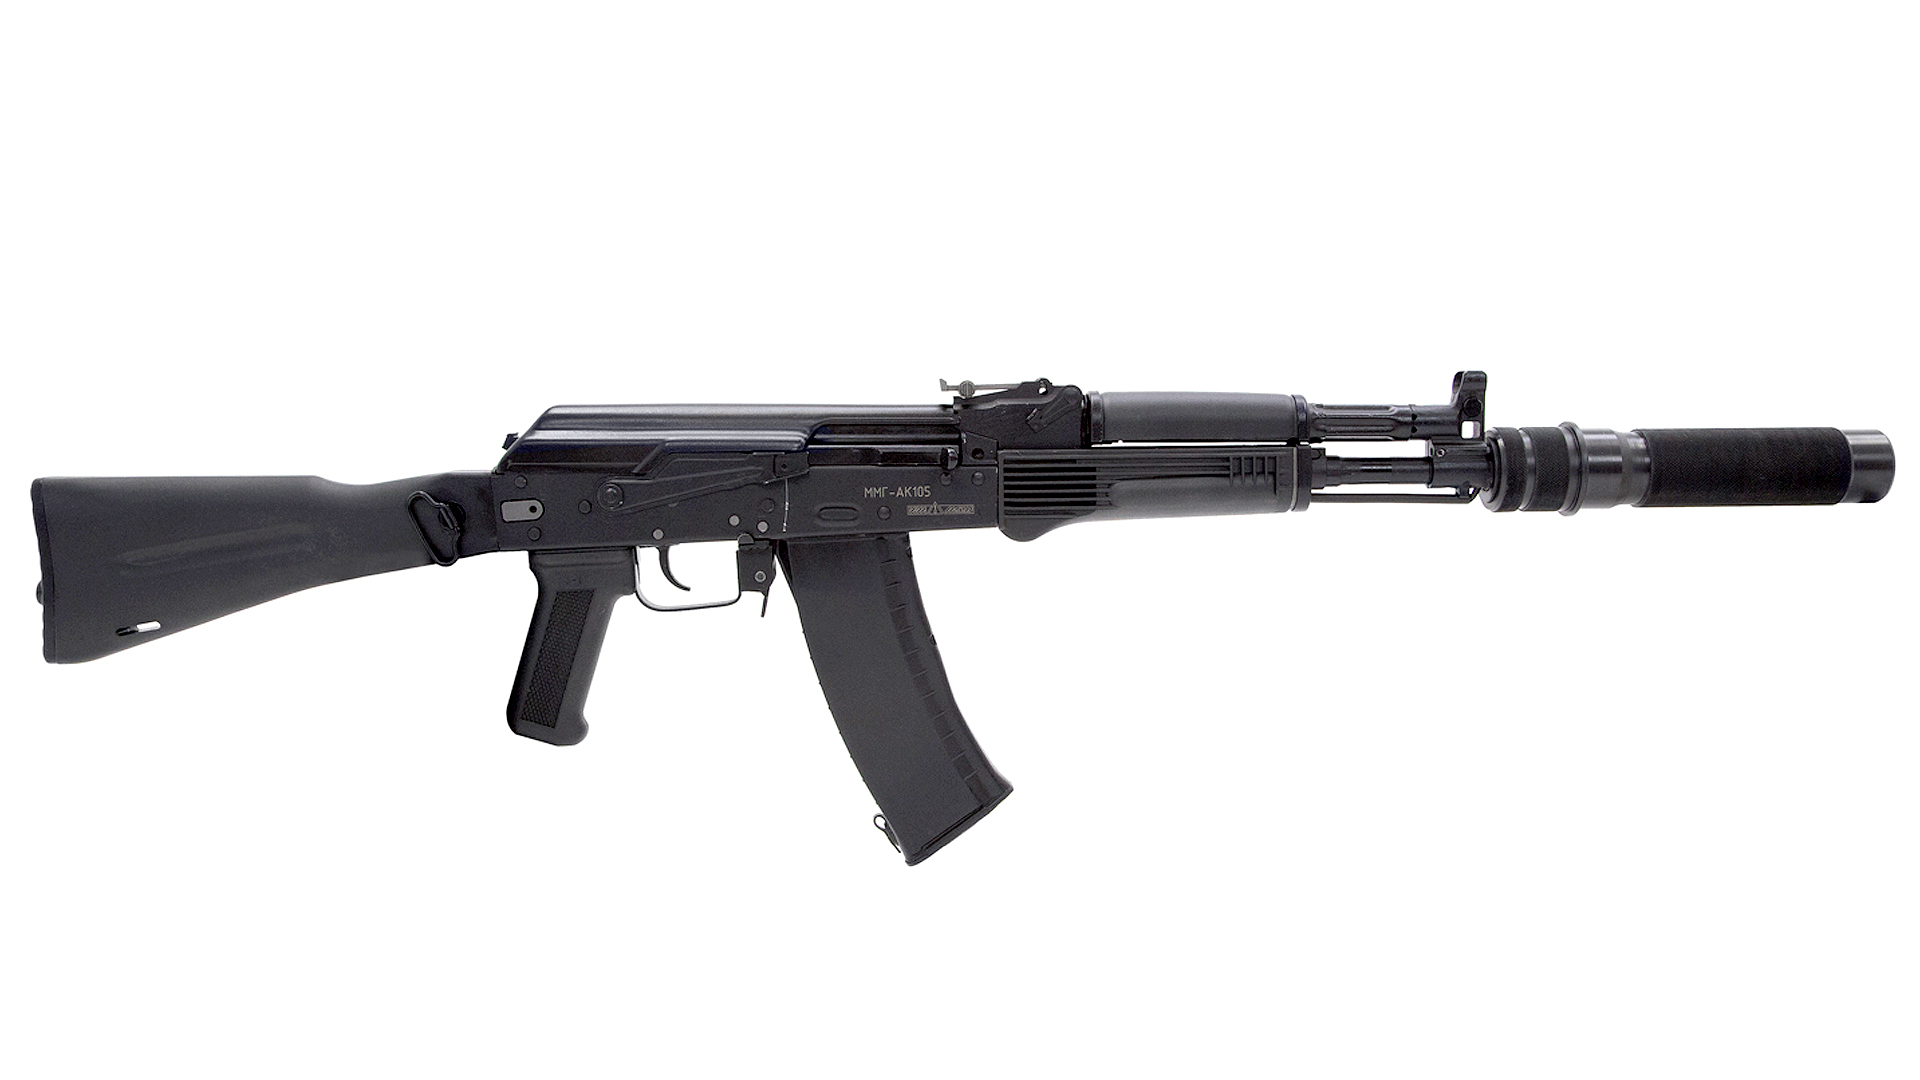 AK-105 BARS Steel Series photo 3